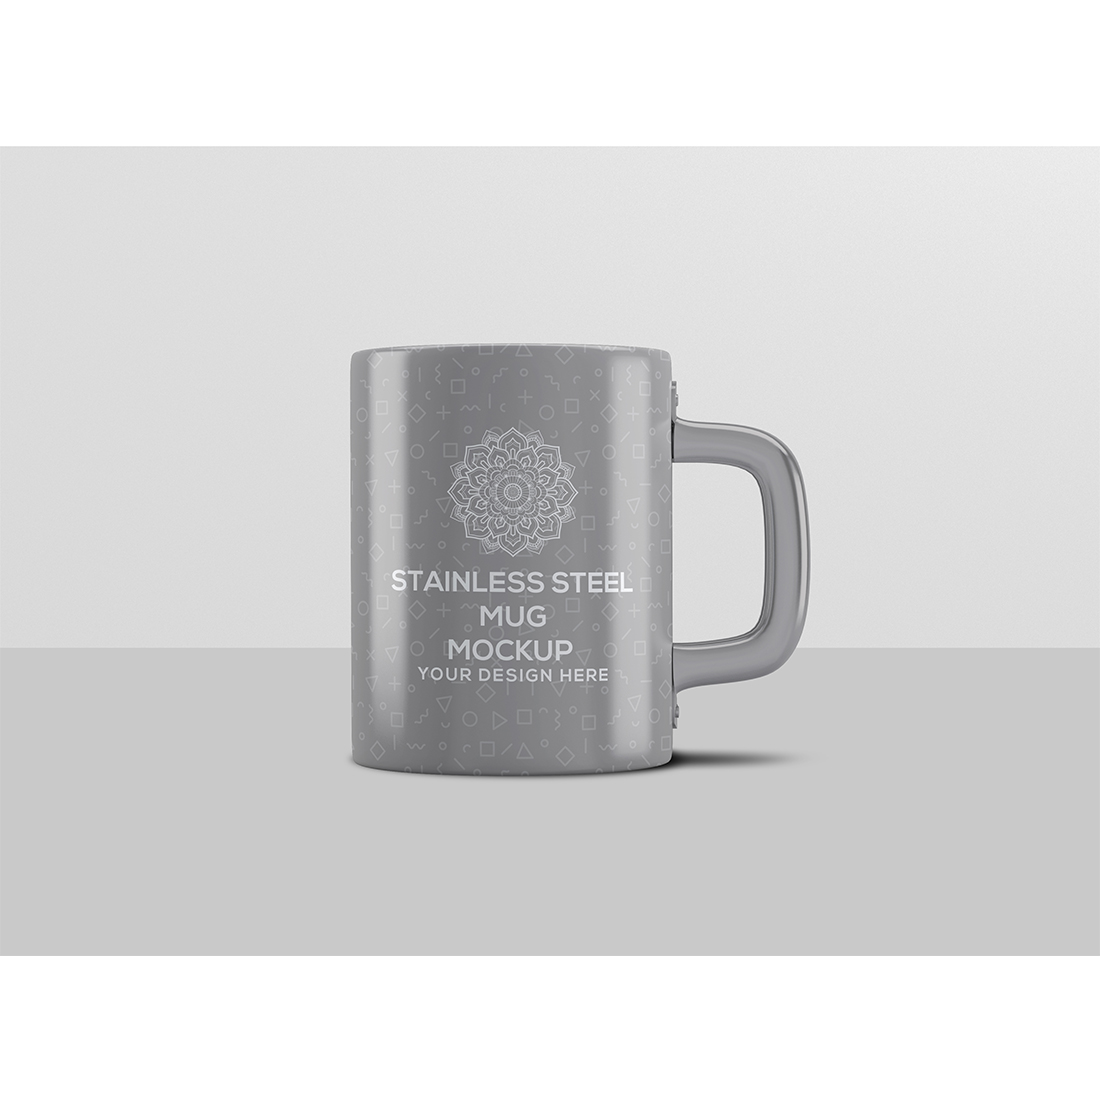 Stainless Steel Mug Mockup cover image.